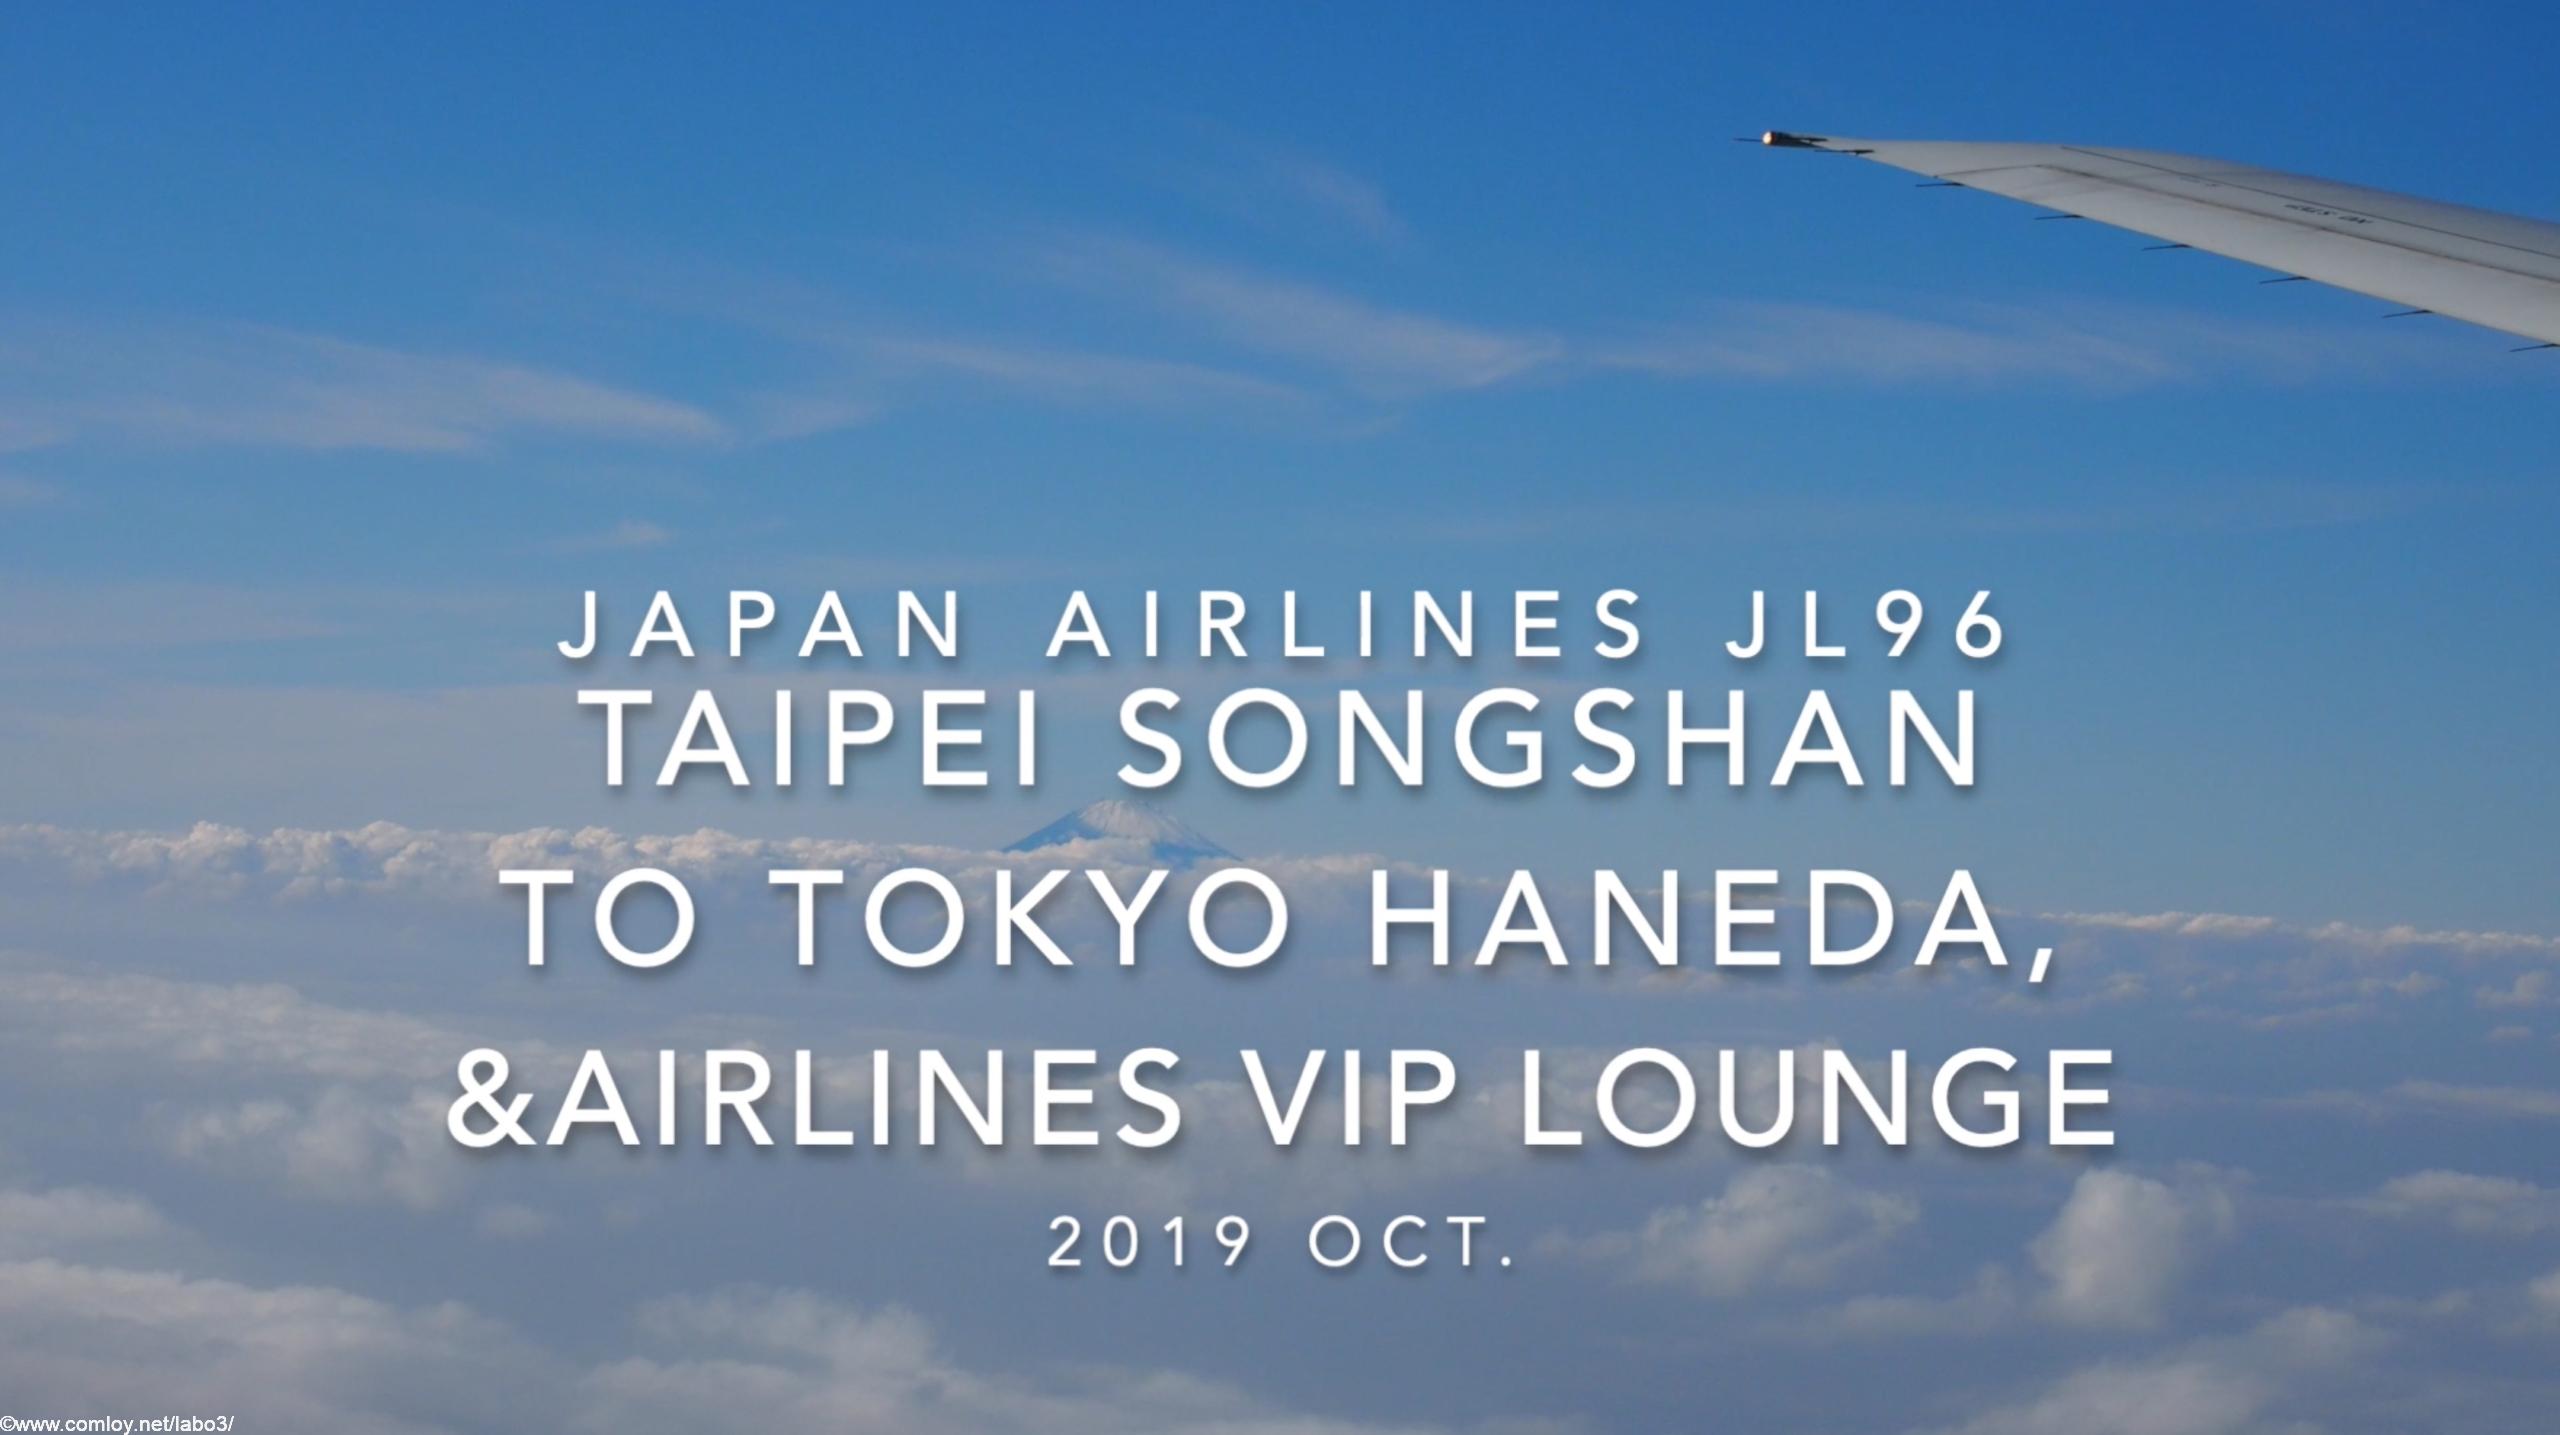 【Flight Report】2019 Oct Japan airlines JL96 TAIPEI TO TOKYO HANEDA 日本航空 台北(松山) - 羽田 搭乗記